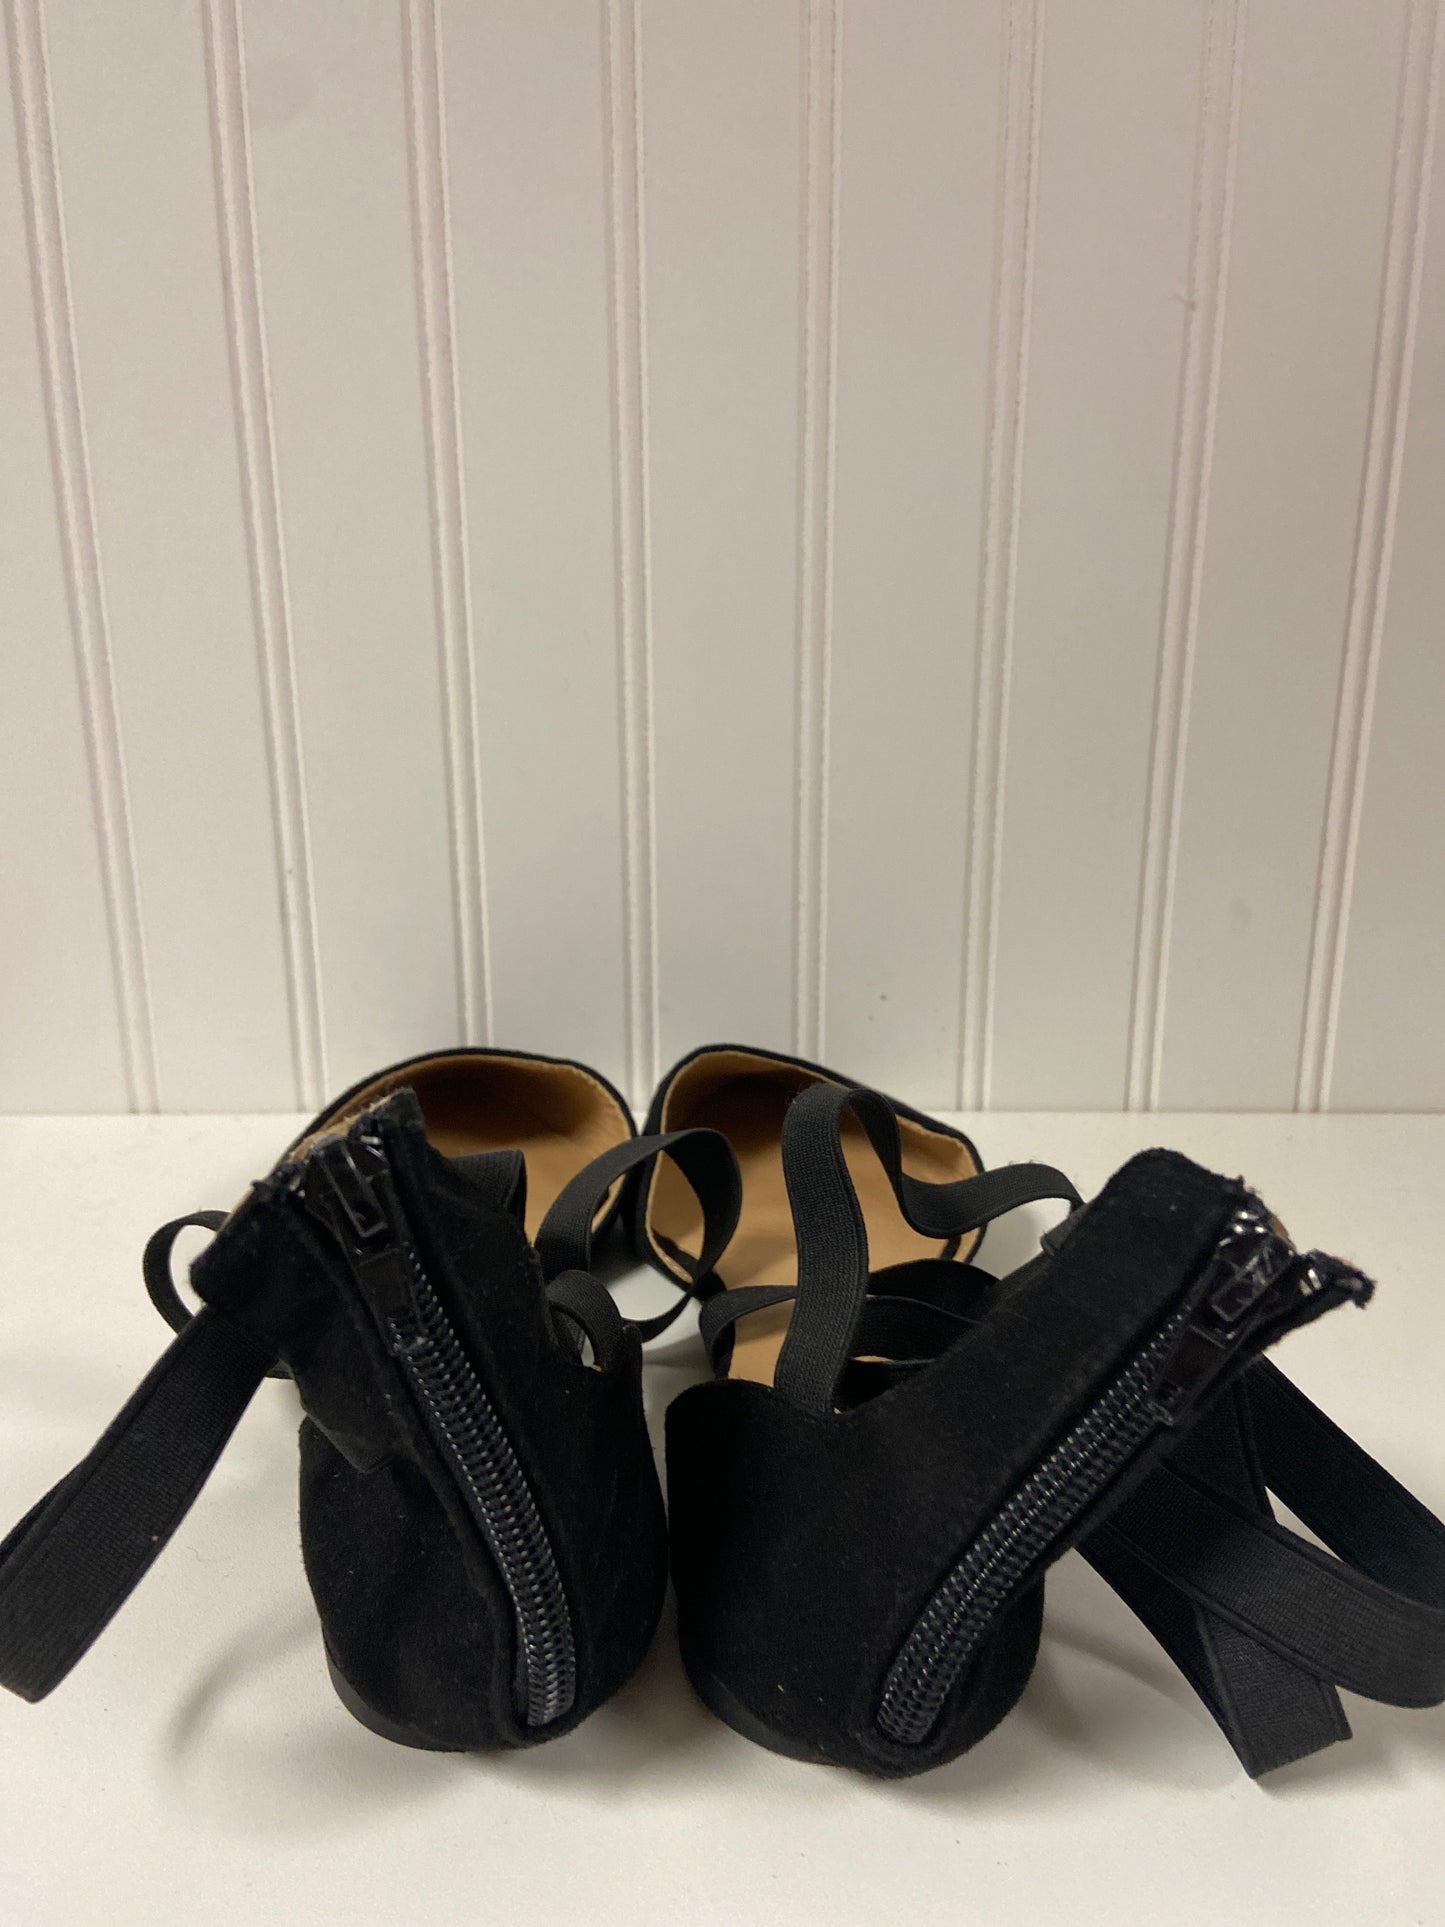 Black Shoes Flats Clothes Mentor, Size 7